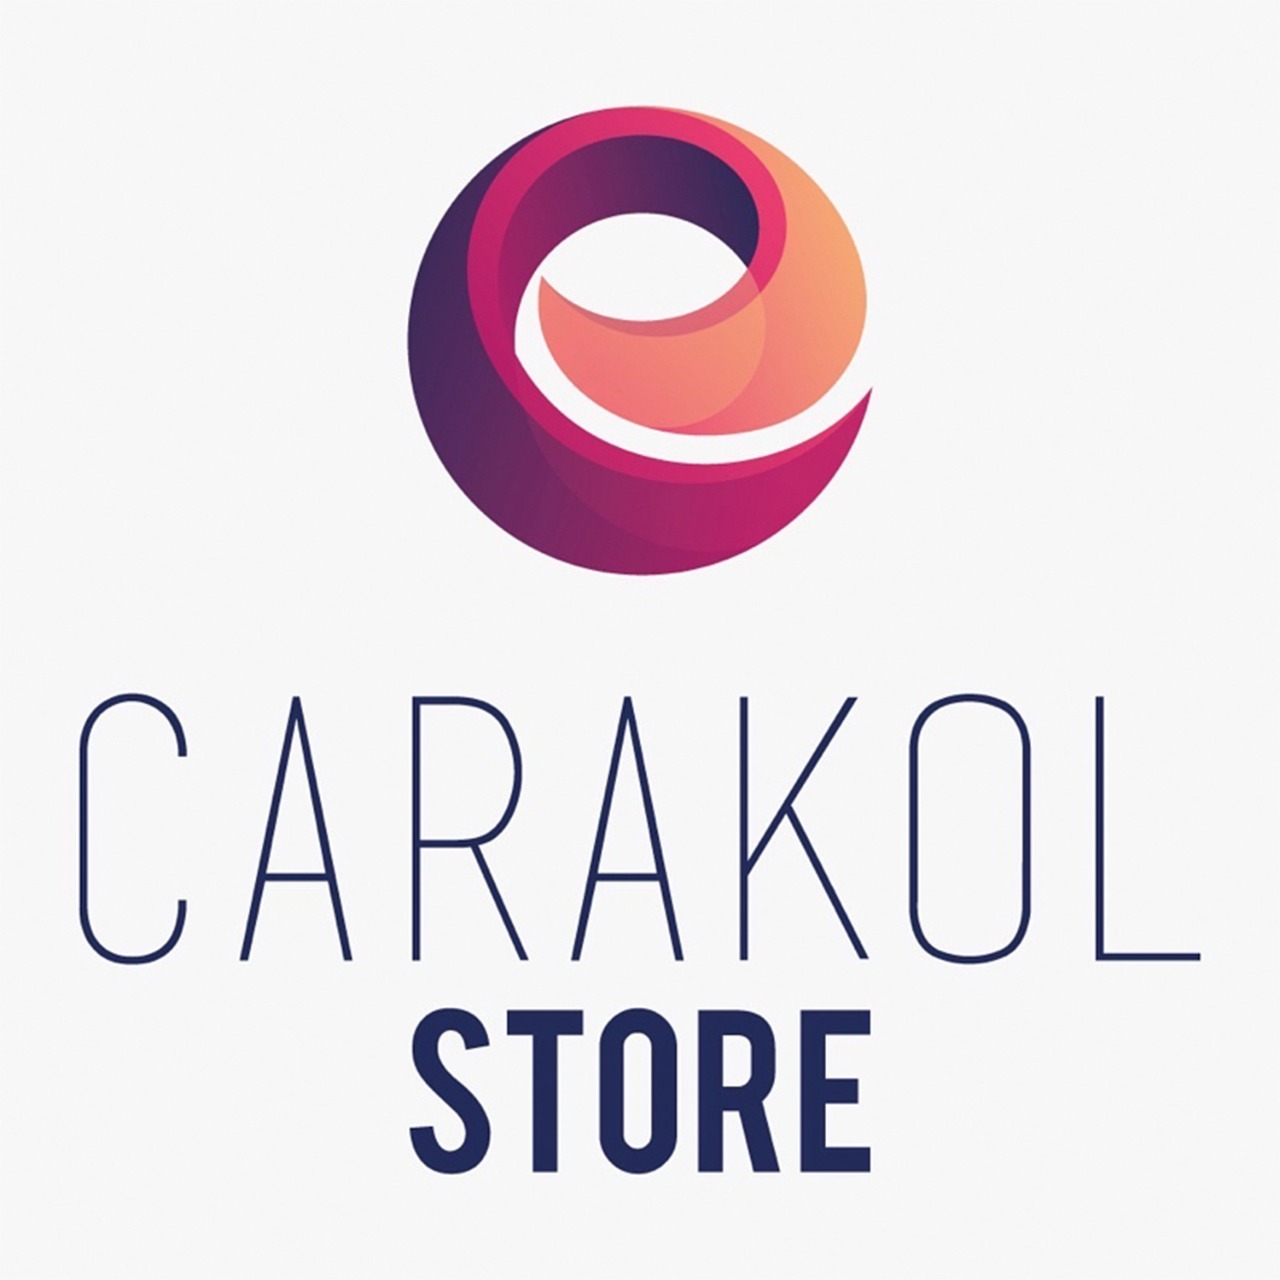 Carakol Store